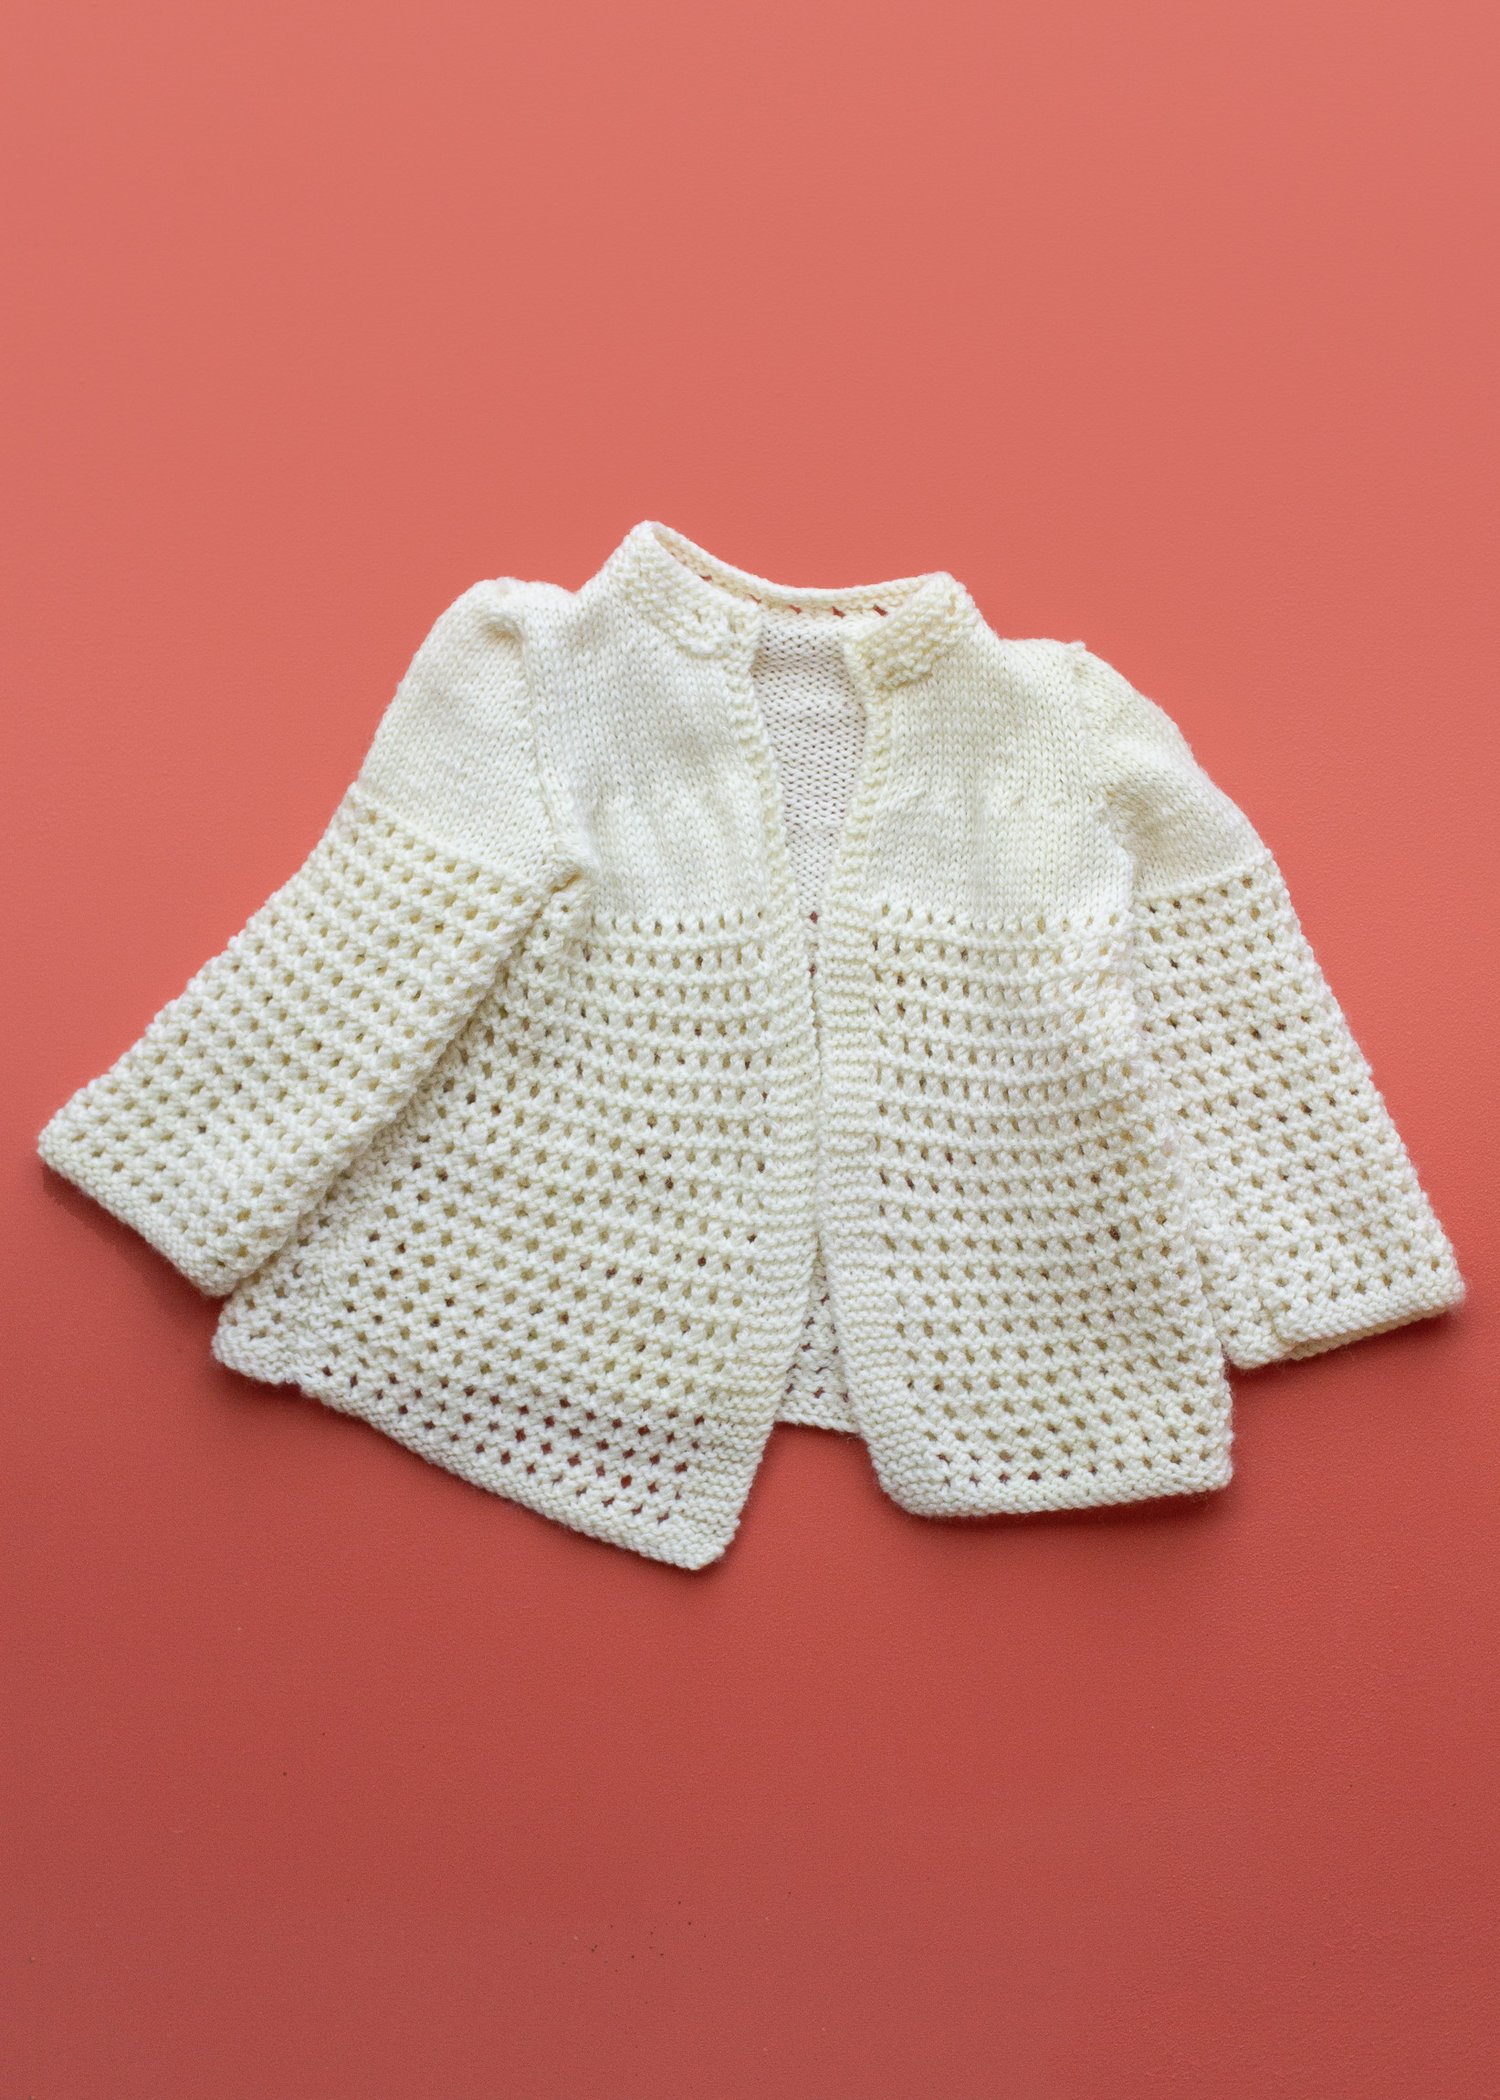 Image of Crochet Style Baby Cardigan